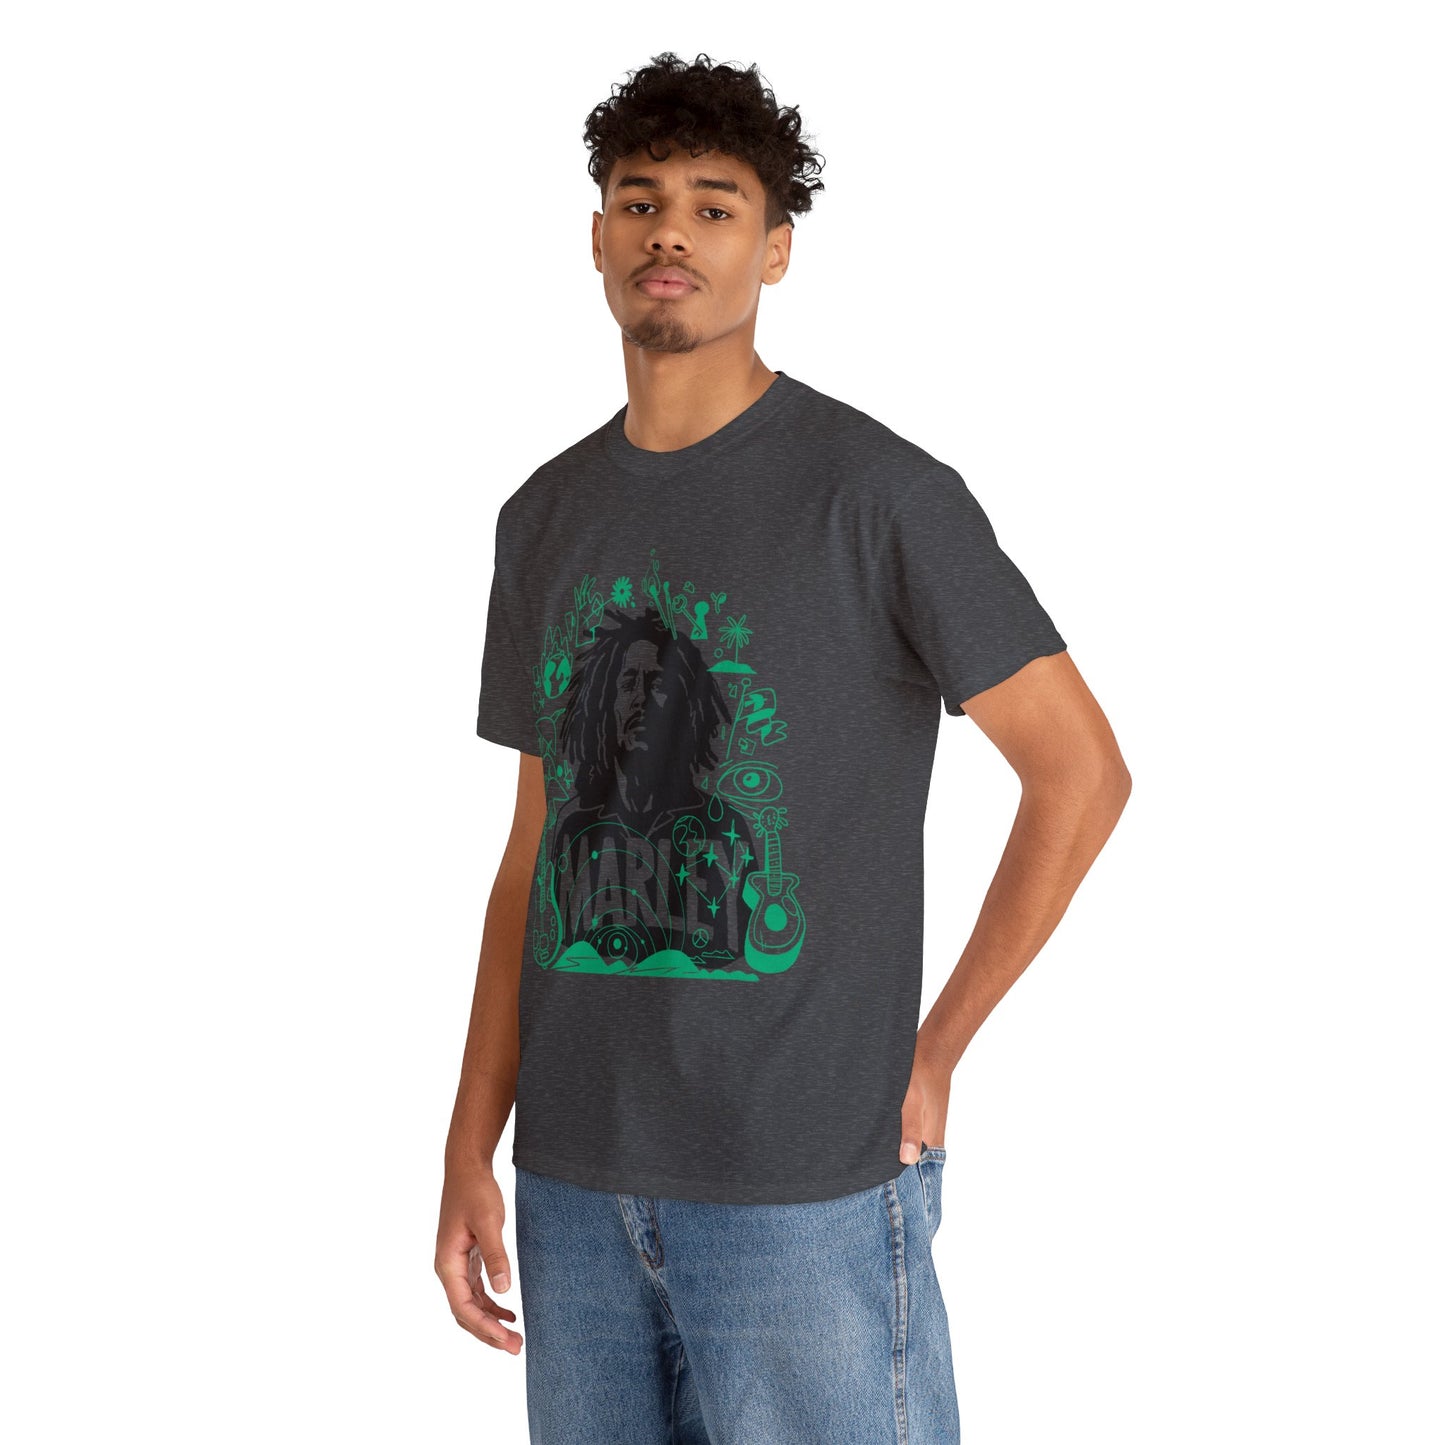 Bob Marley “Legend's Melody" Tribute T-shirt!